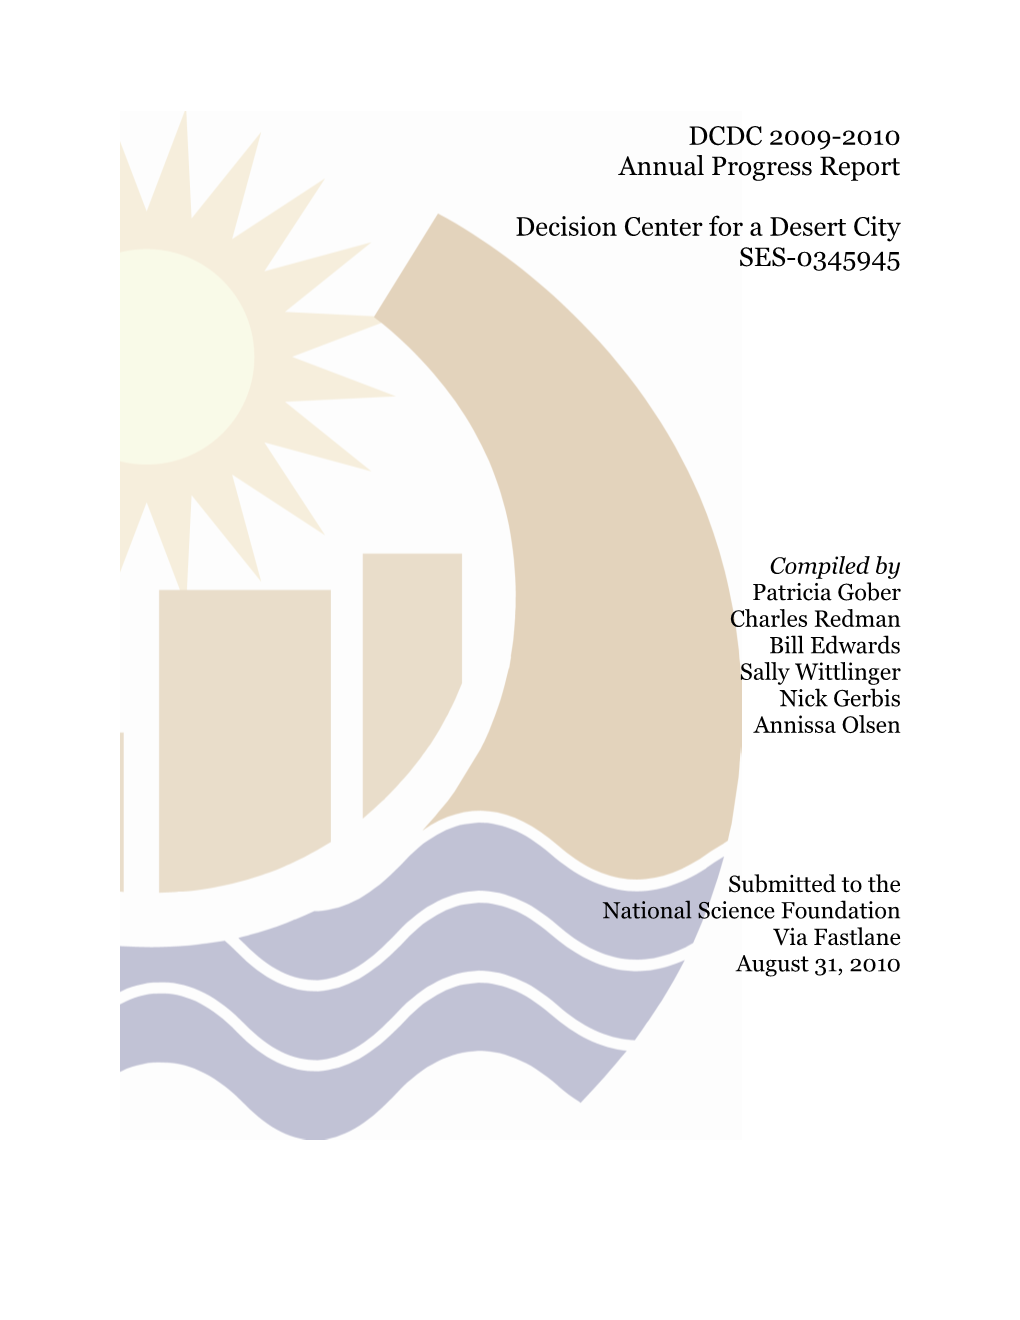 DCDC 2009-2010 Annual Progress Report Decision Center for a Desert City SES-0345945